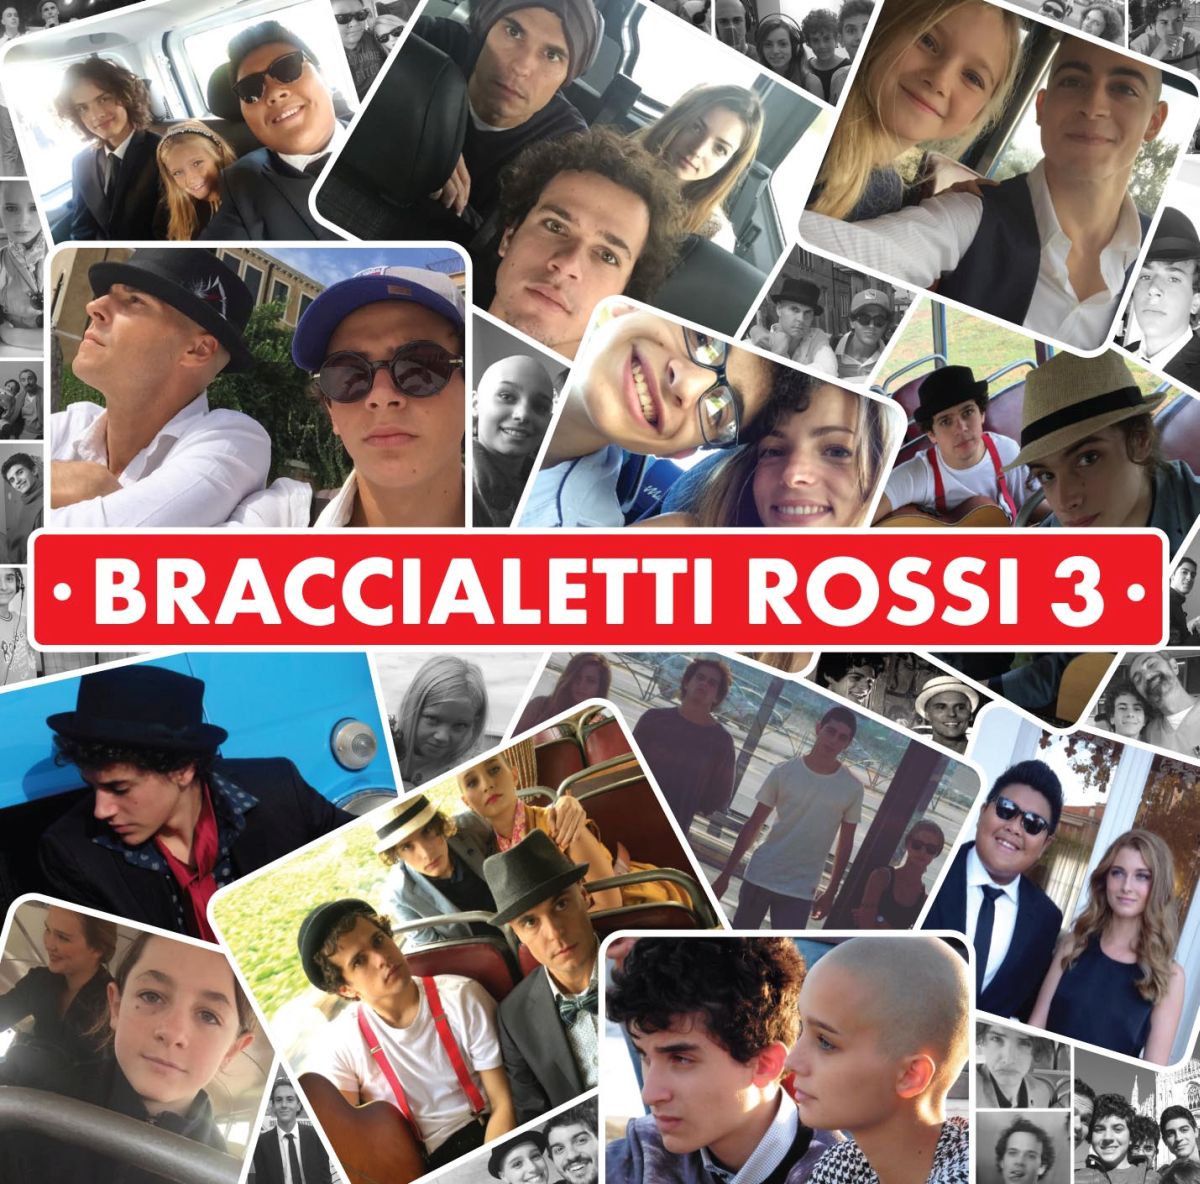 NICCOLÒ AGLIARDI: venerdì 14 ottobre esce l’album “BRACCIALETTI ROSSI 3”